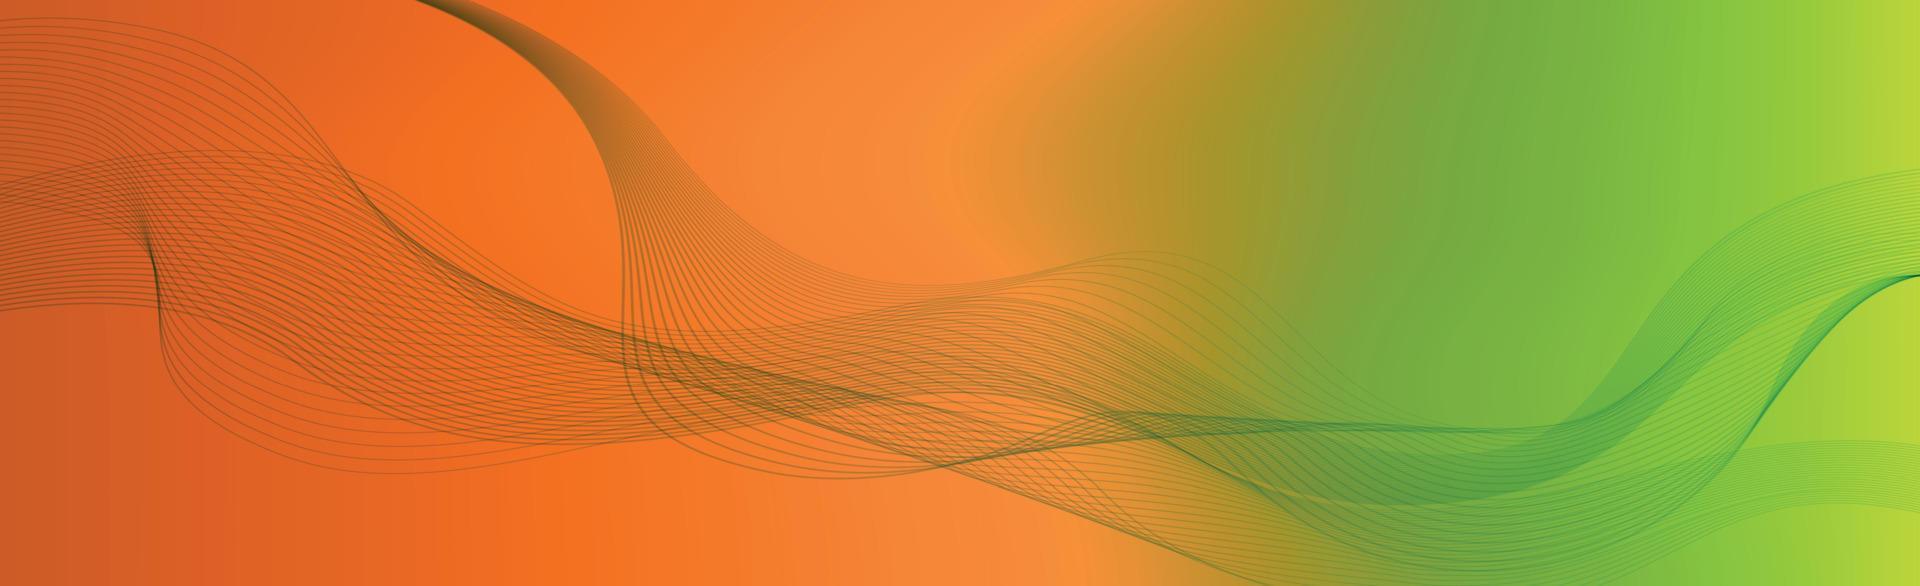 Panorámica colorida luz abstracto elegante multi fondo con líneas onduladas - vector